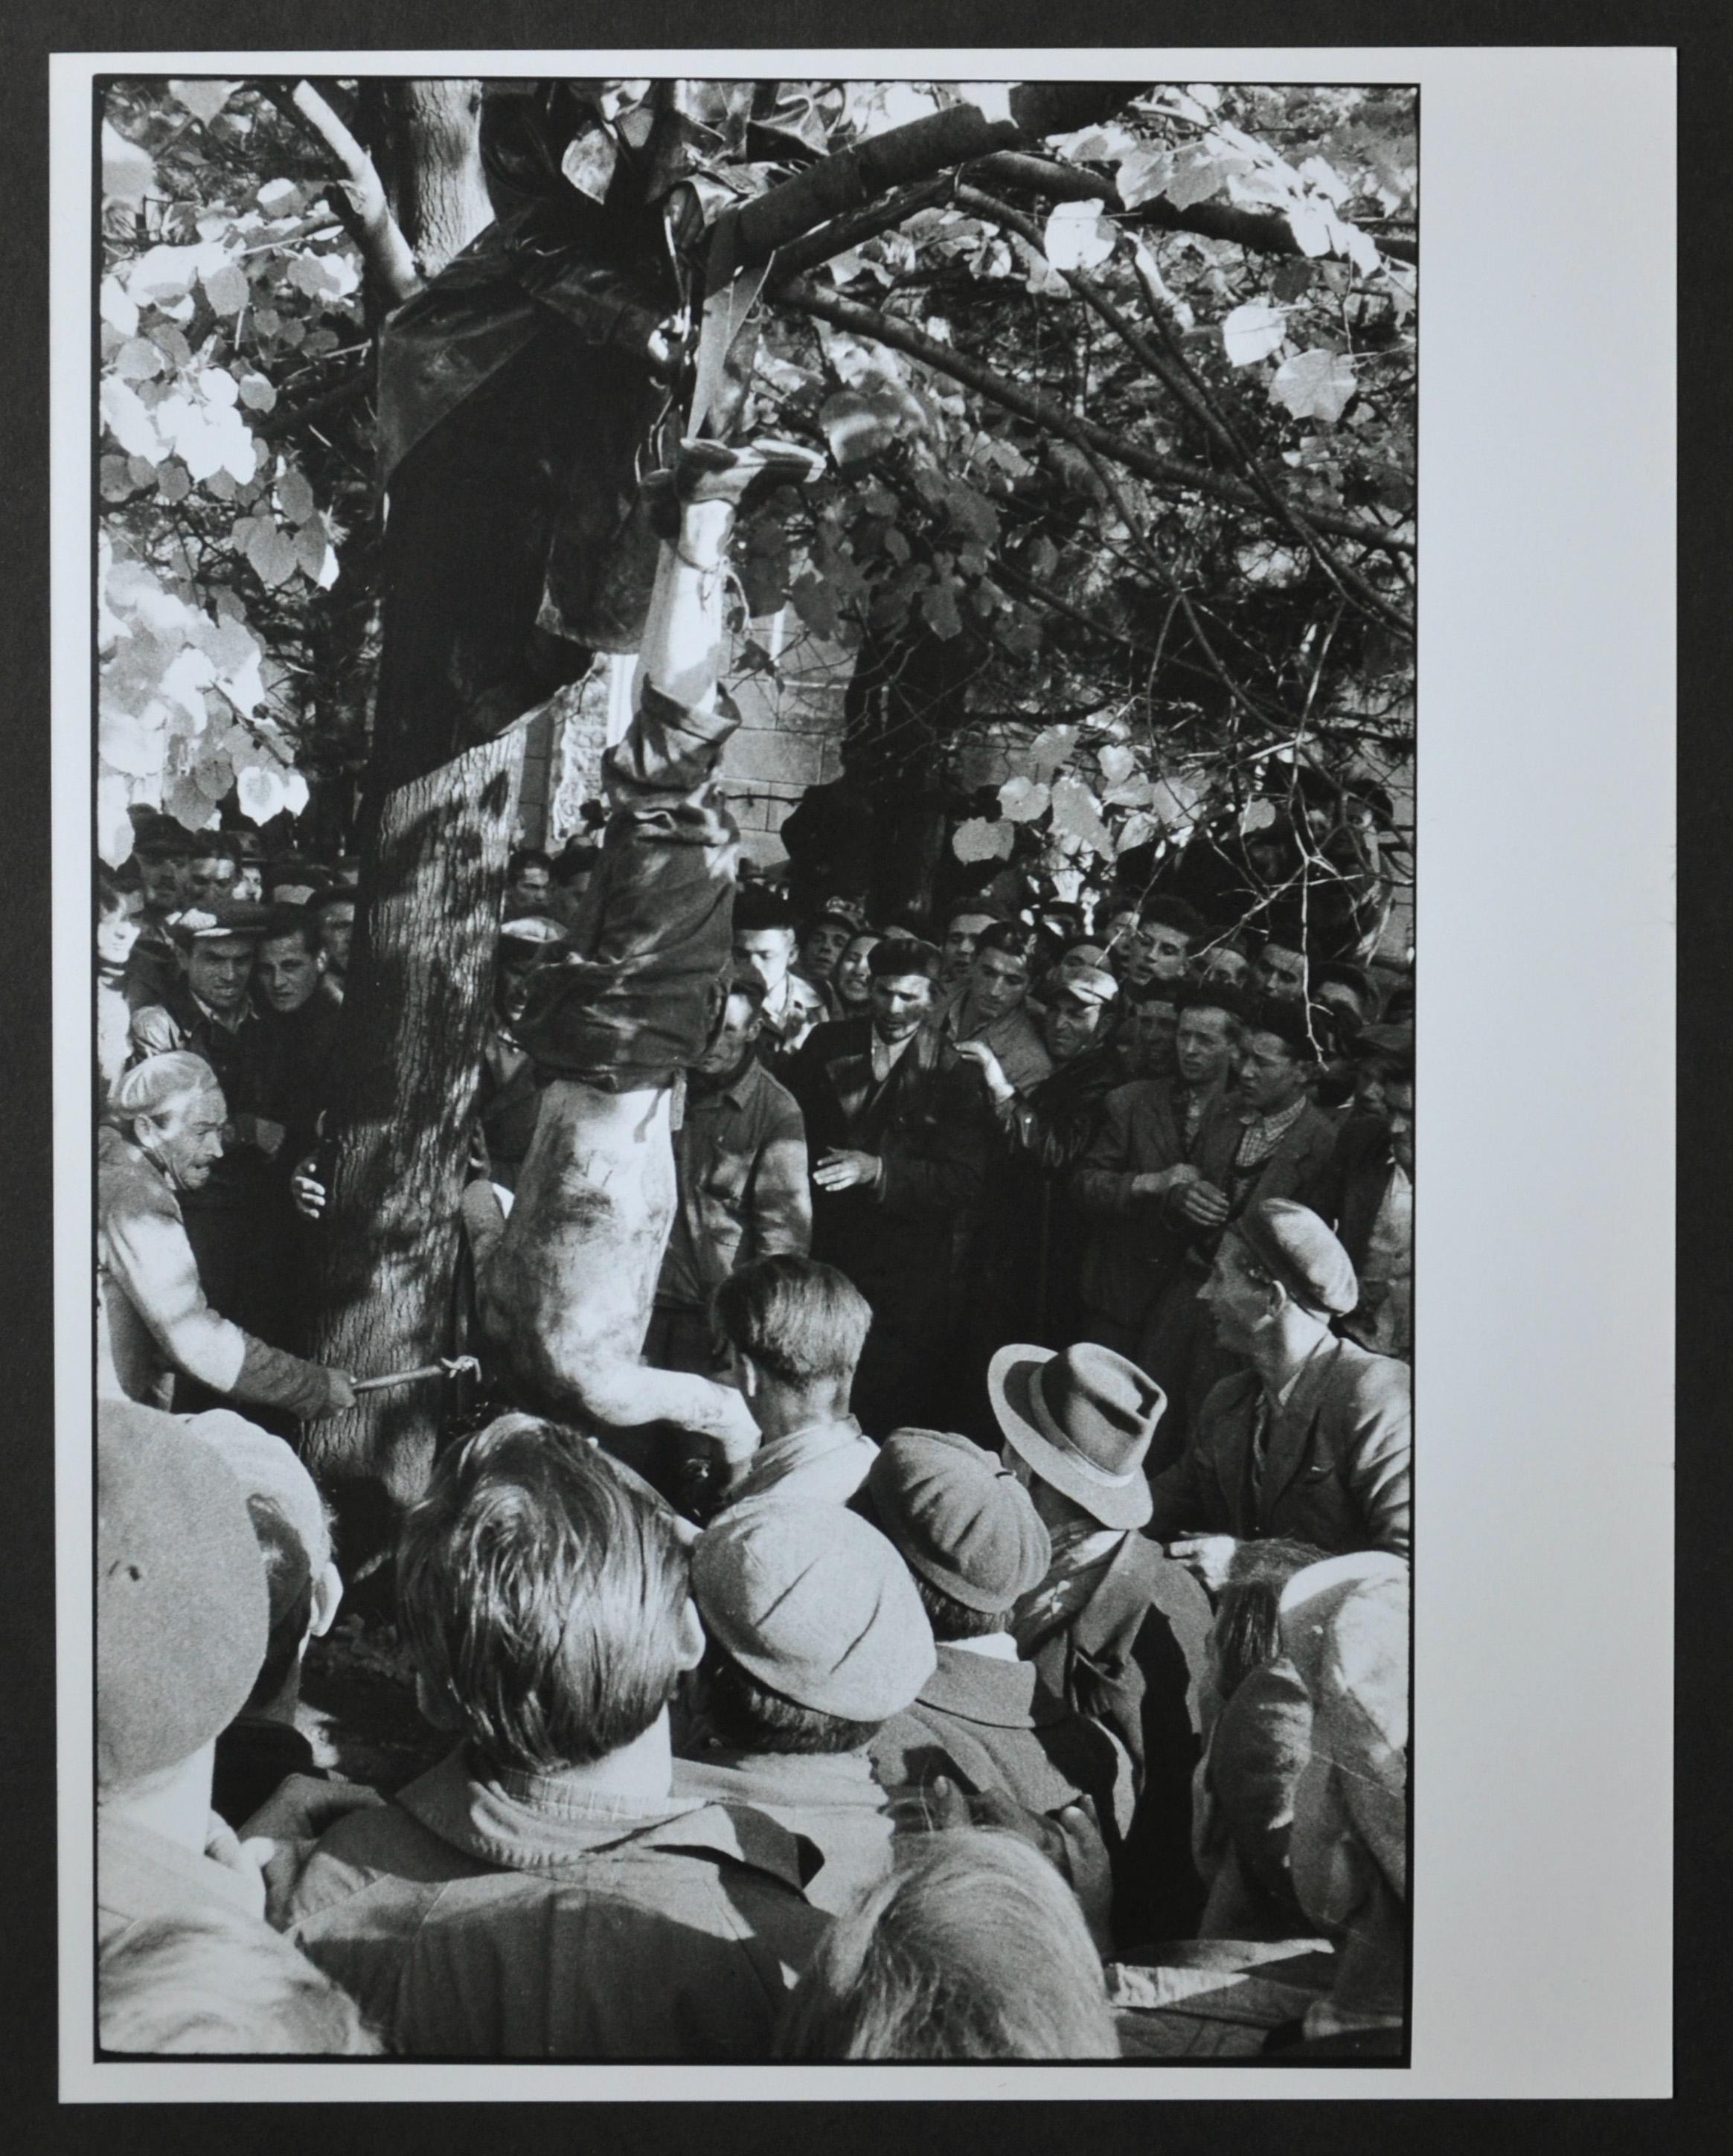 Rolf Gillhausen Black and White Photograph - Hungarian revolutionaries hanging pro-Soviet activist, Hungary 1956.